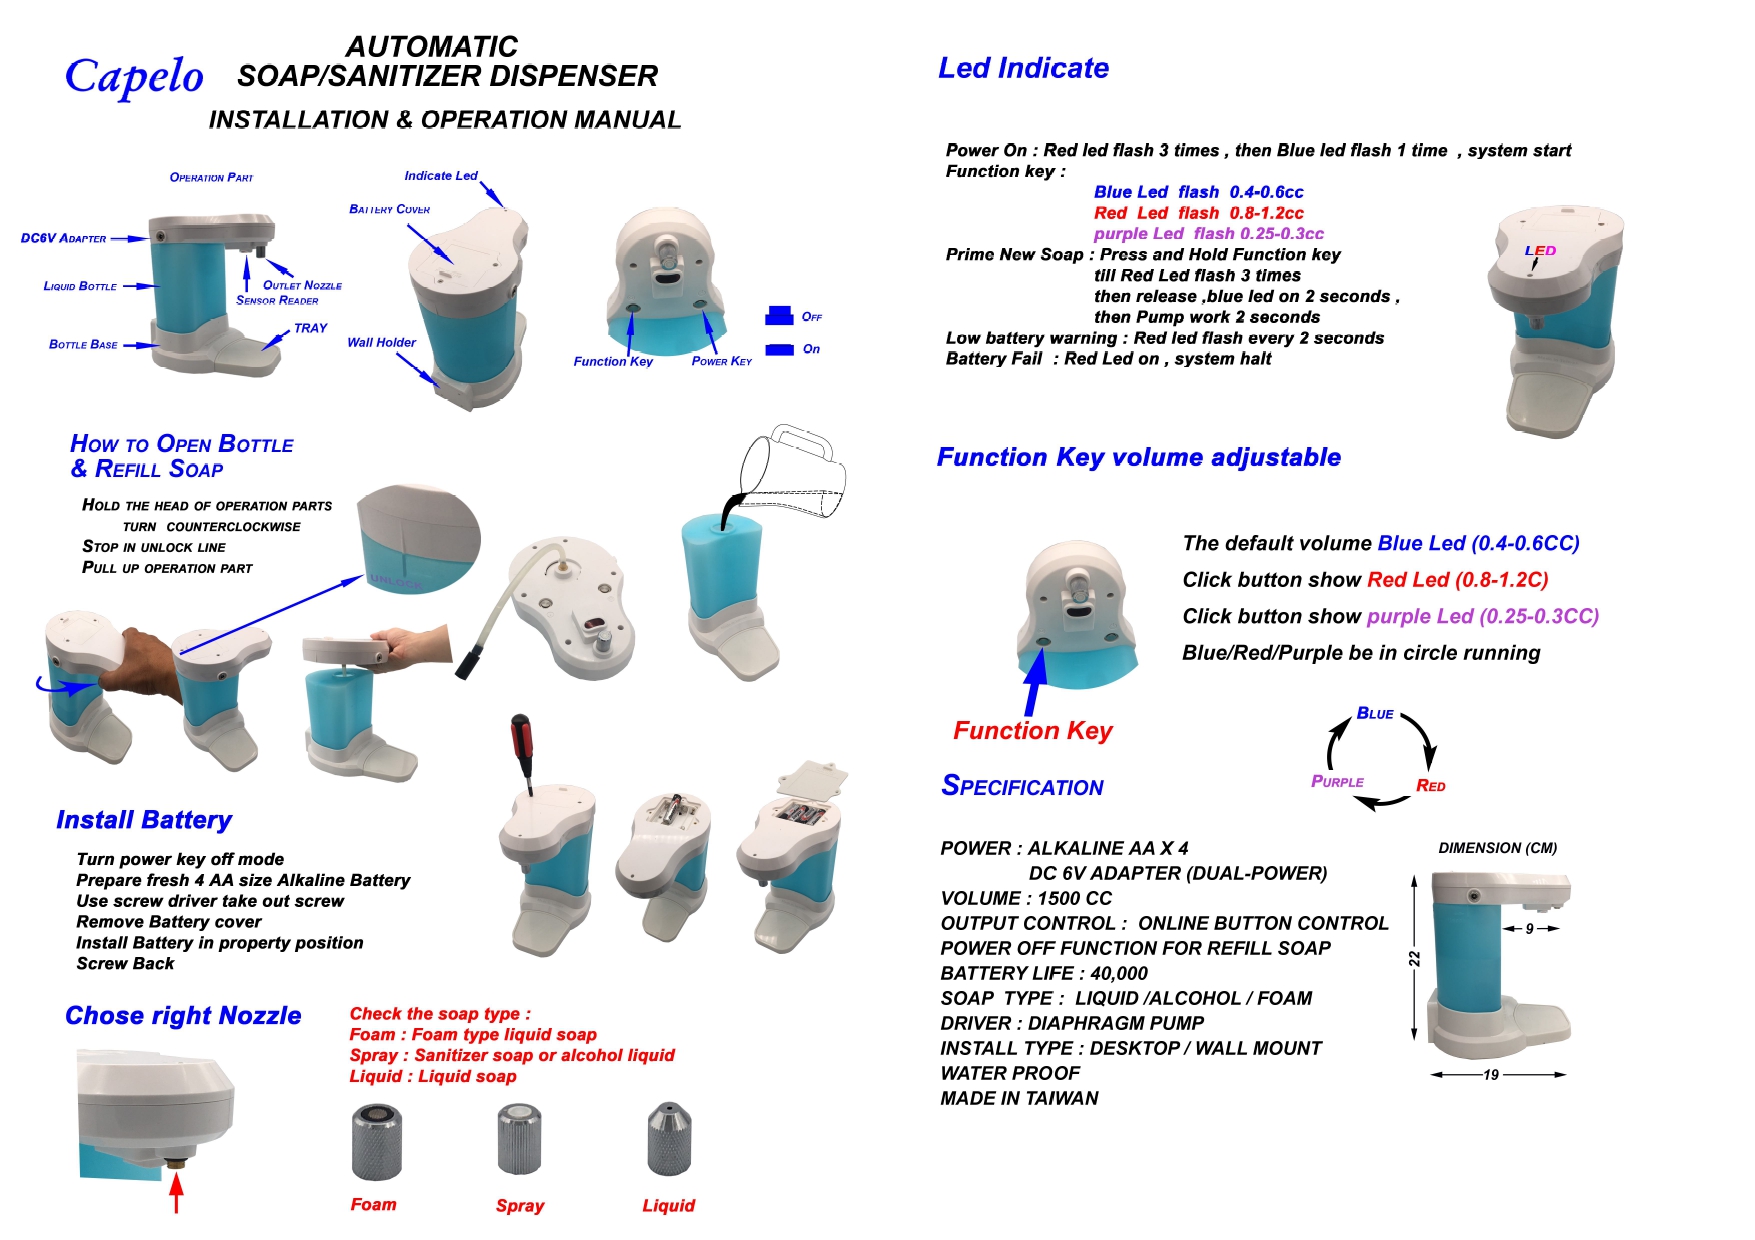 CAPELO-20S 3IN1 Automatic Soap/Sanitizer Dispenser (Liquid/Spray/Foam type)